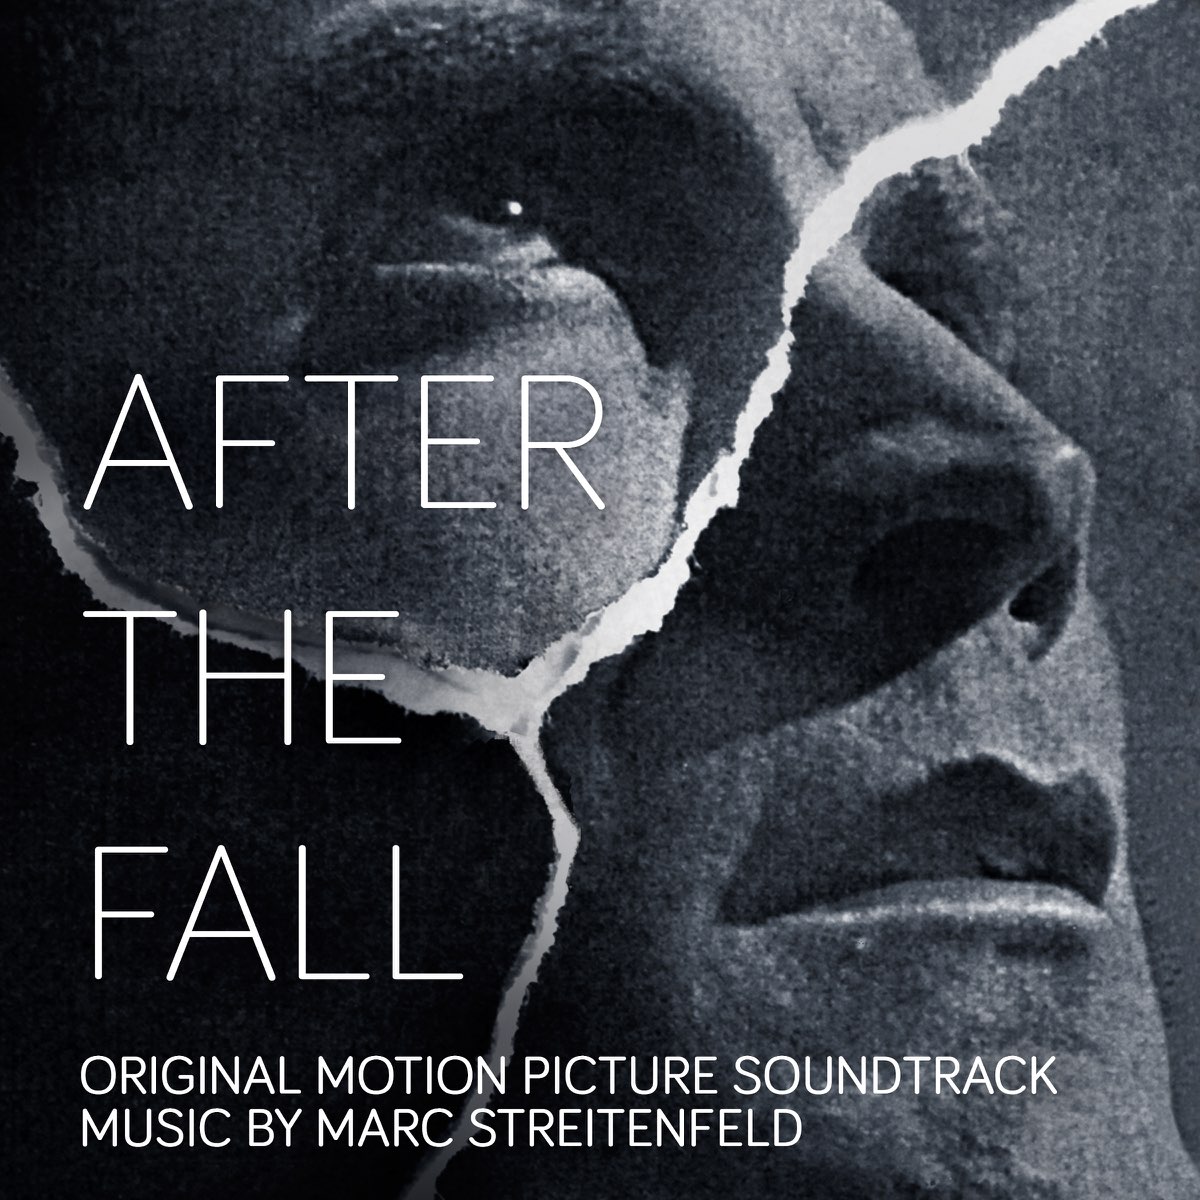 Marc Streitenfeld. Soundtrack the after. Fallen soundtrack